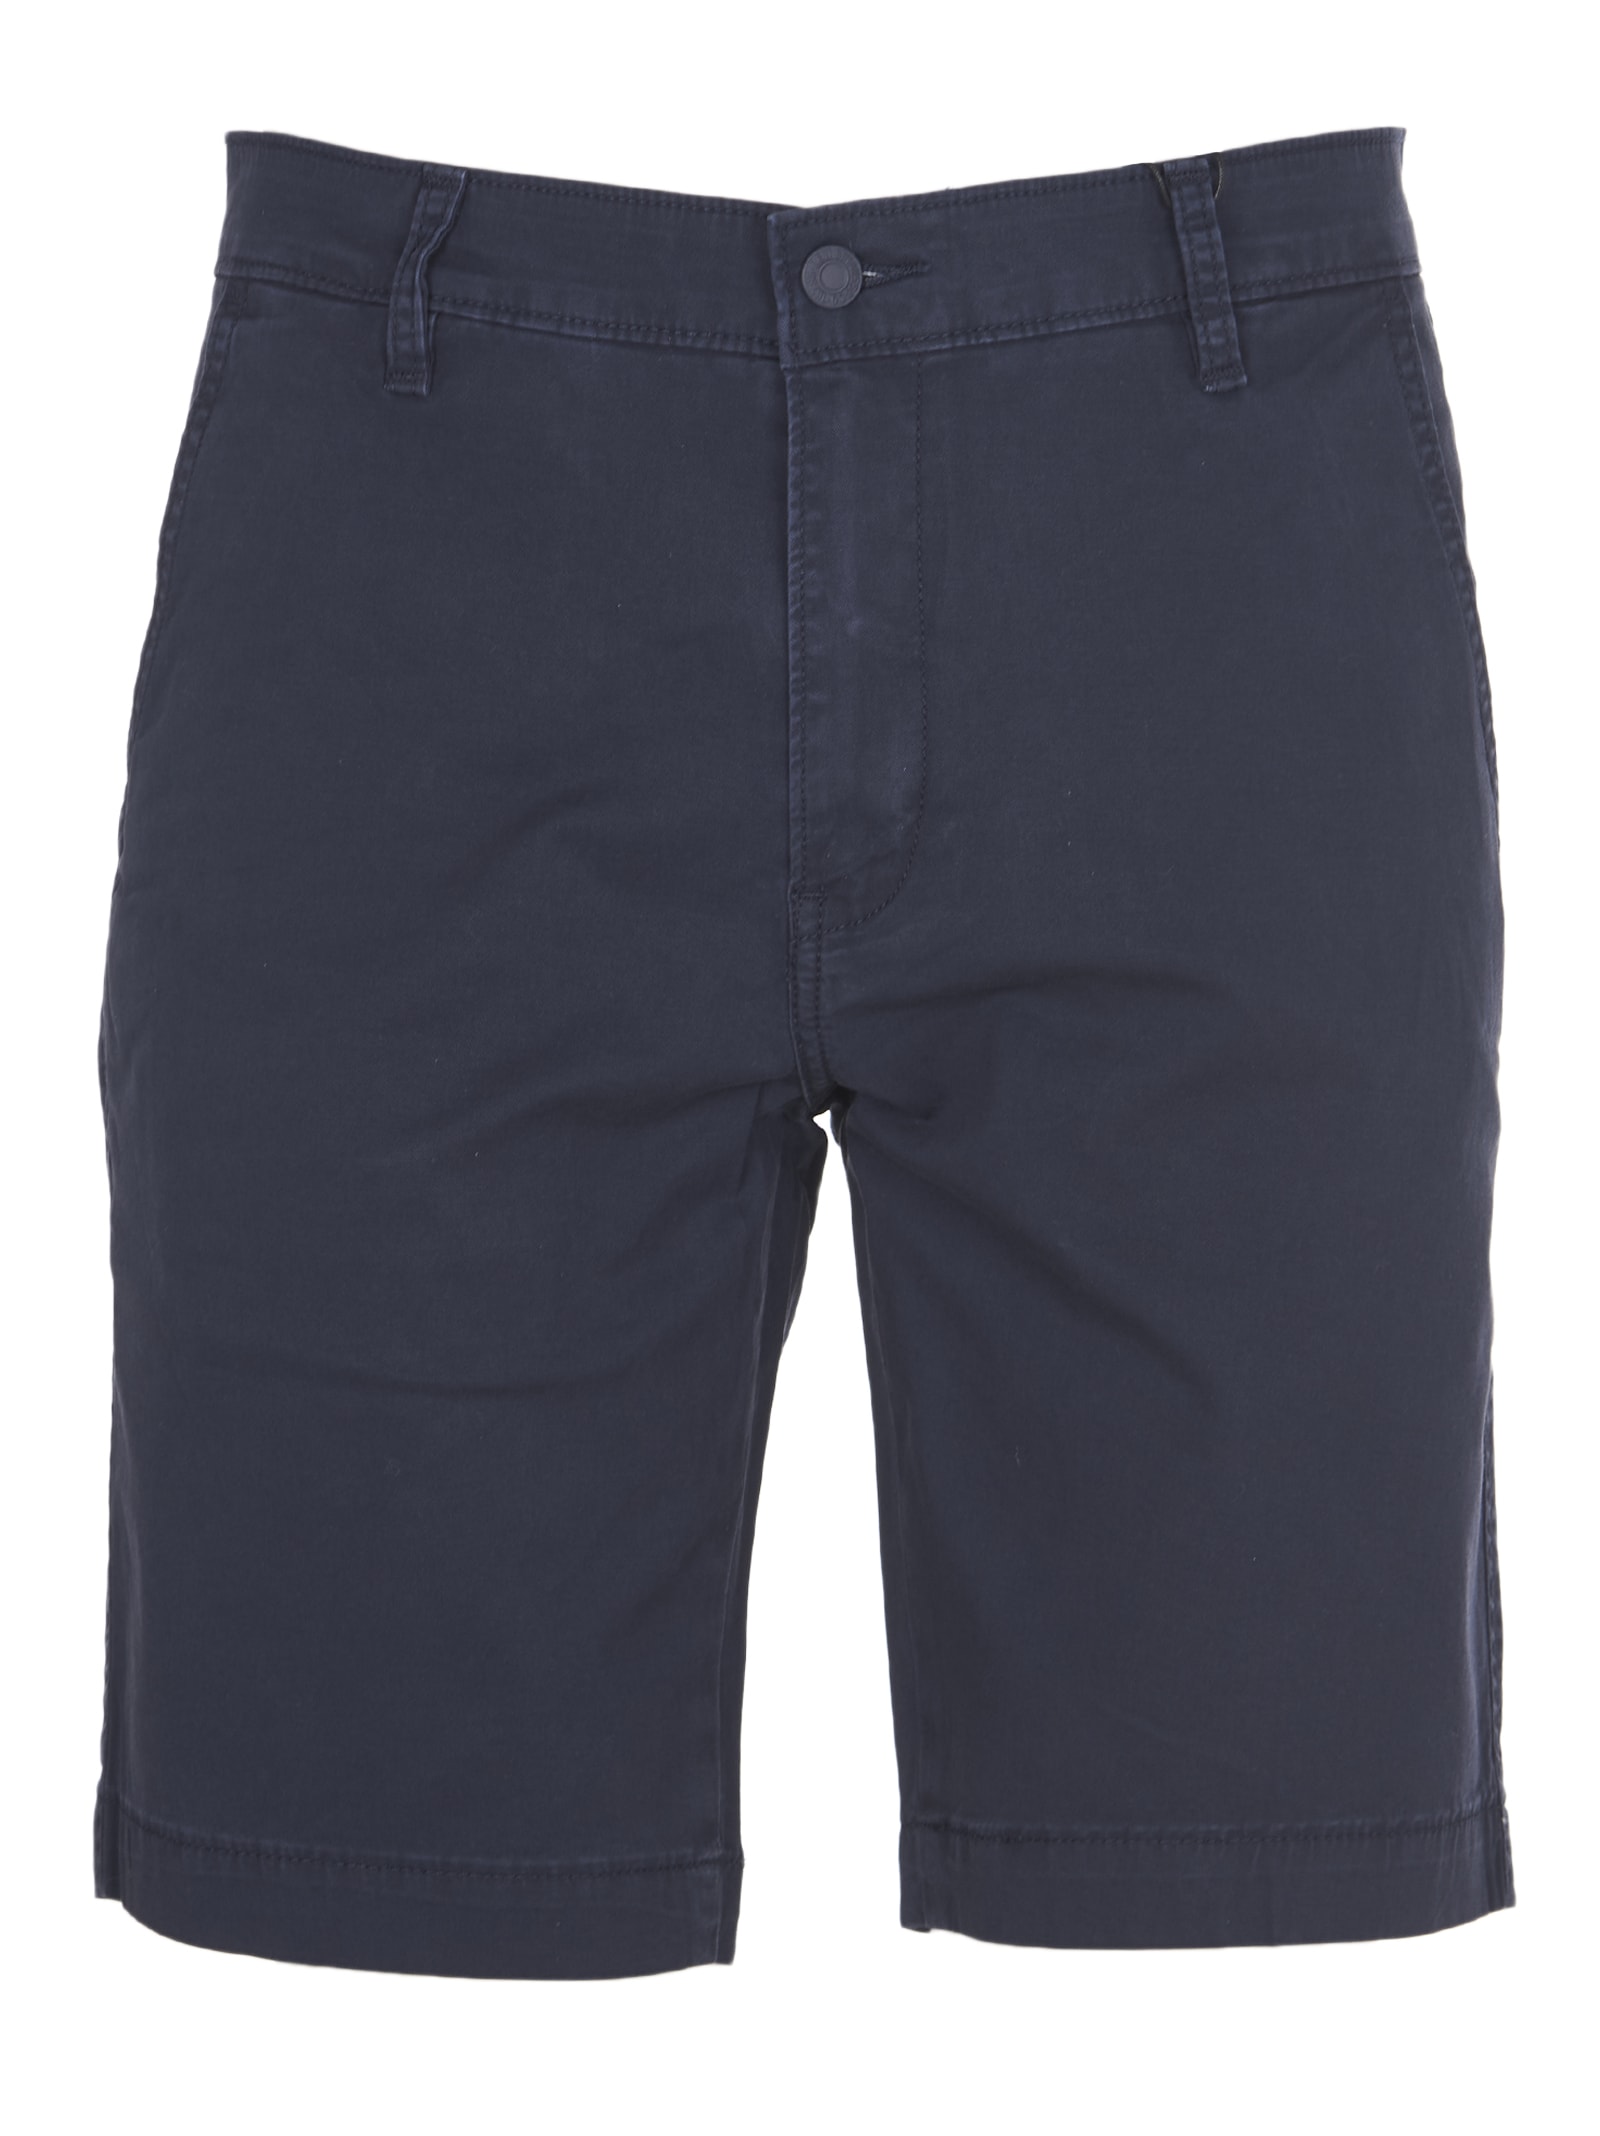 Levis Blue Chino Shorts